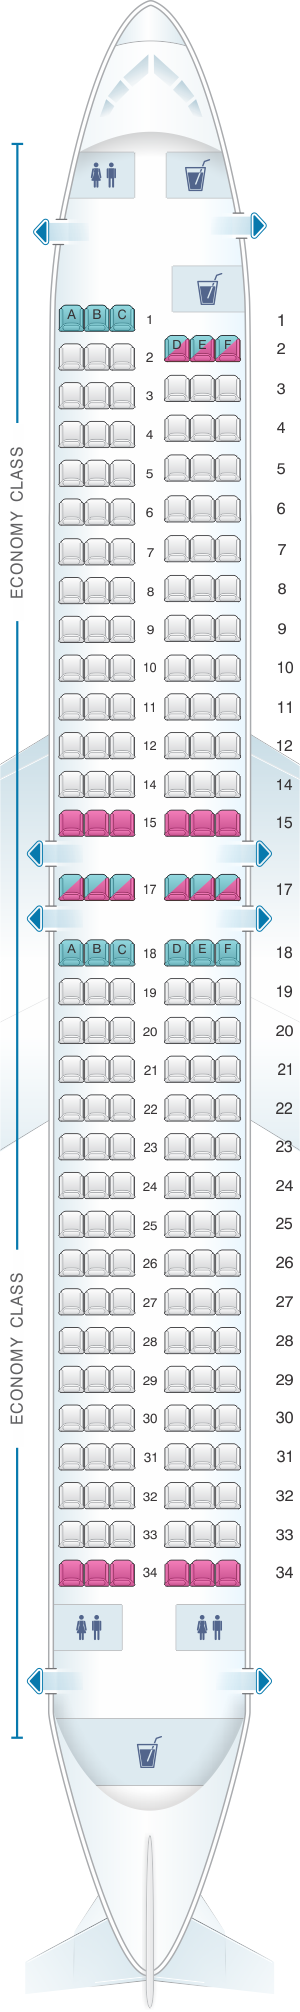 Sitzplan sunexpress 737 800